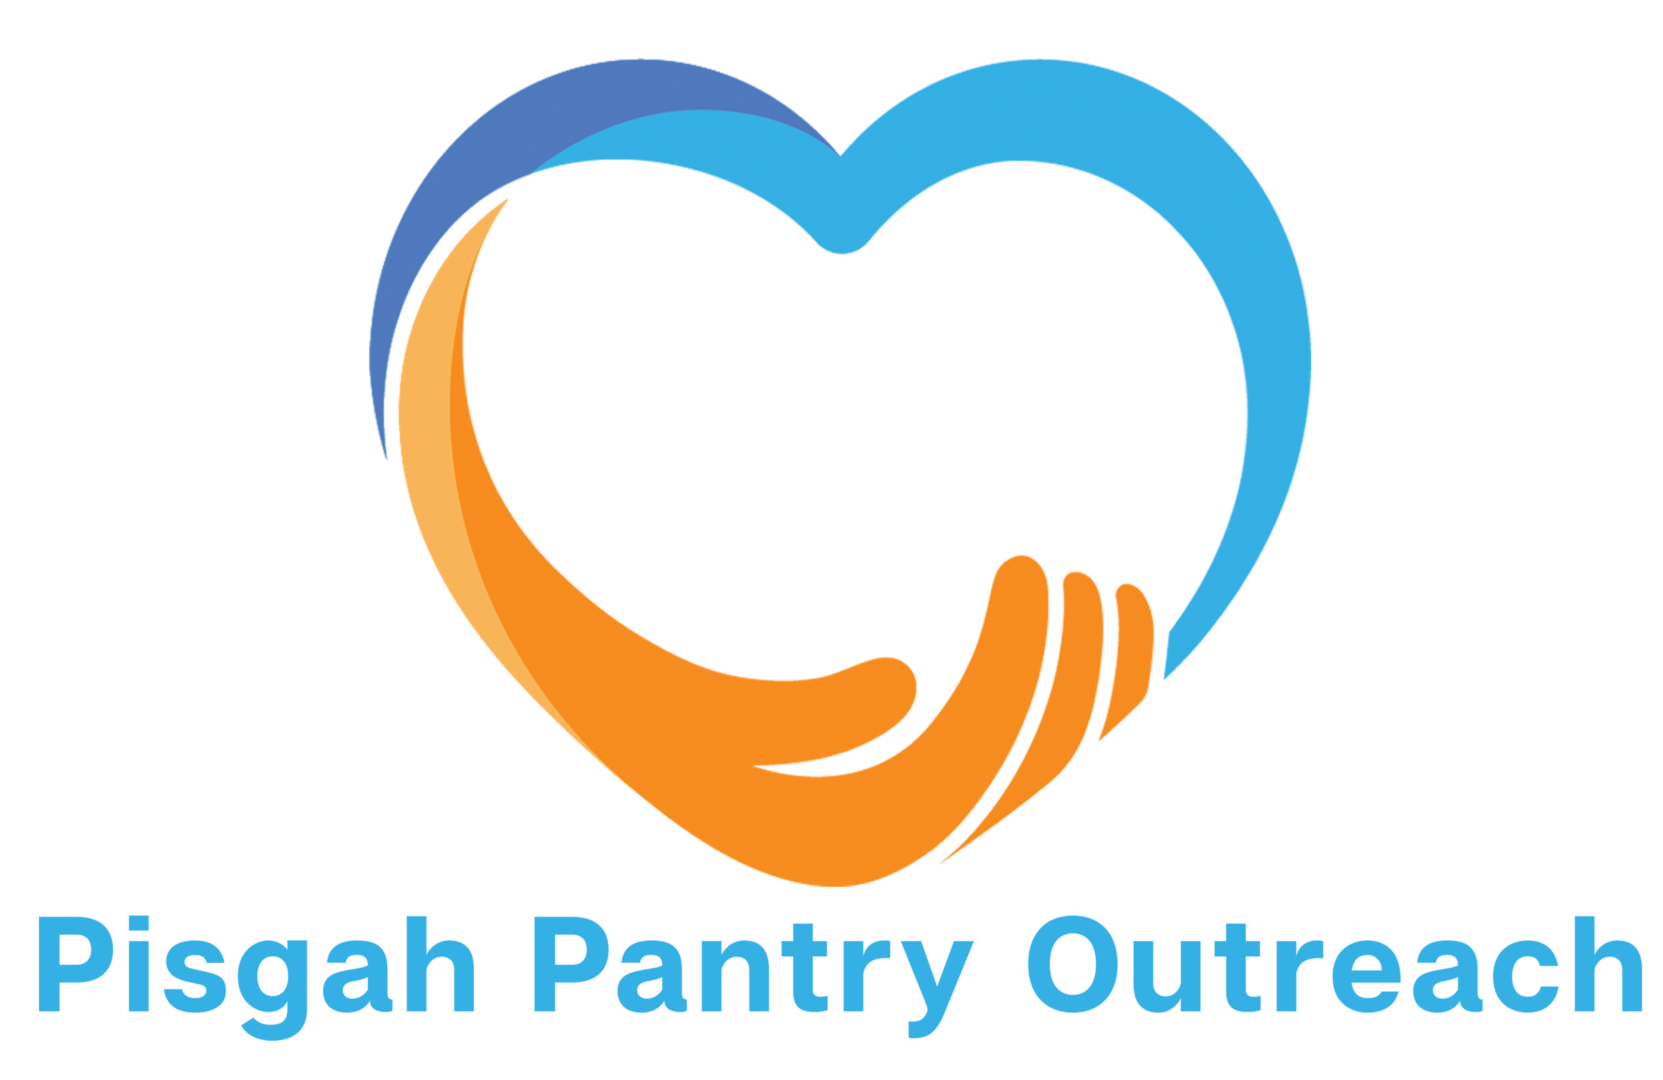 Pisgah Pantry Outreach